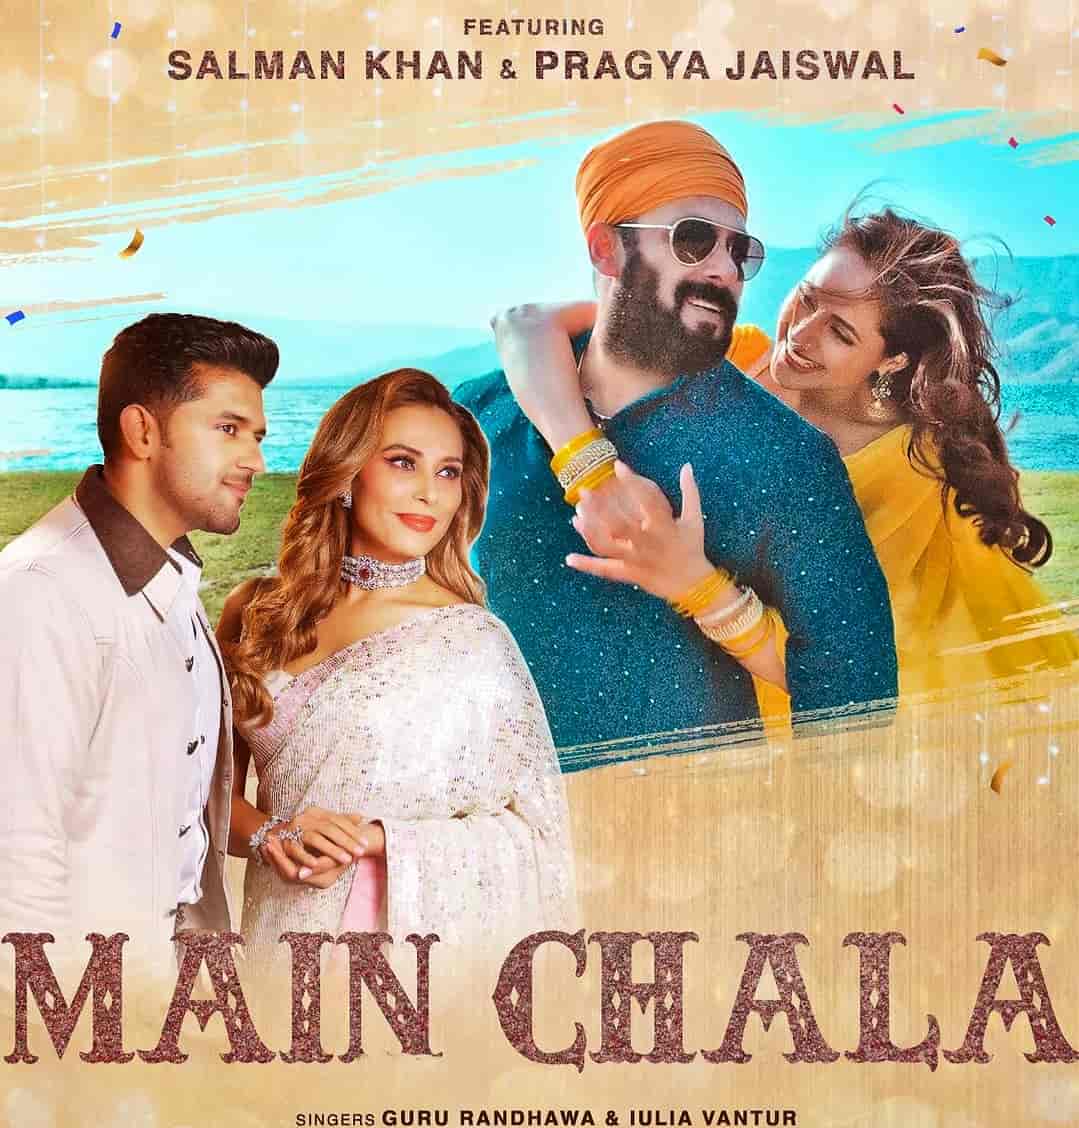 Main Chala Image Features Salman Khan And Pragya Jaiswal Sung By Guru Randhawa